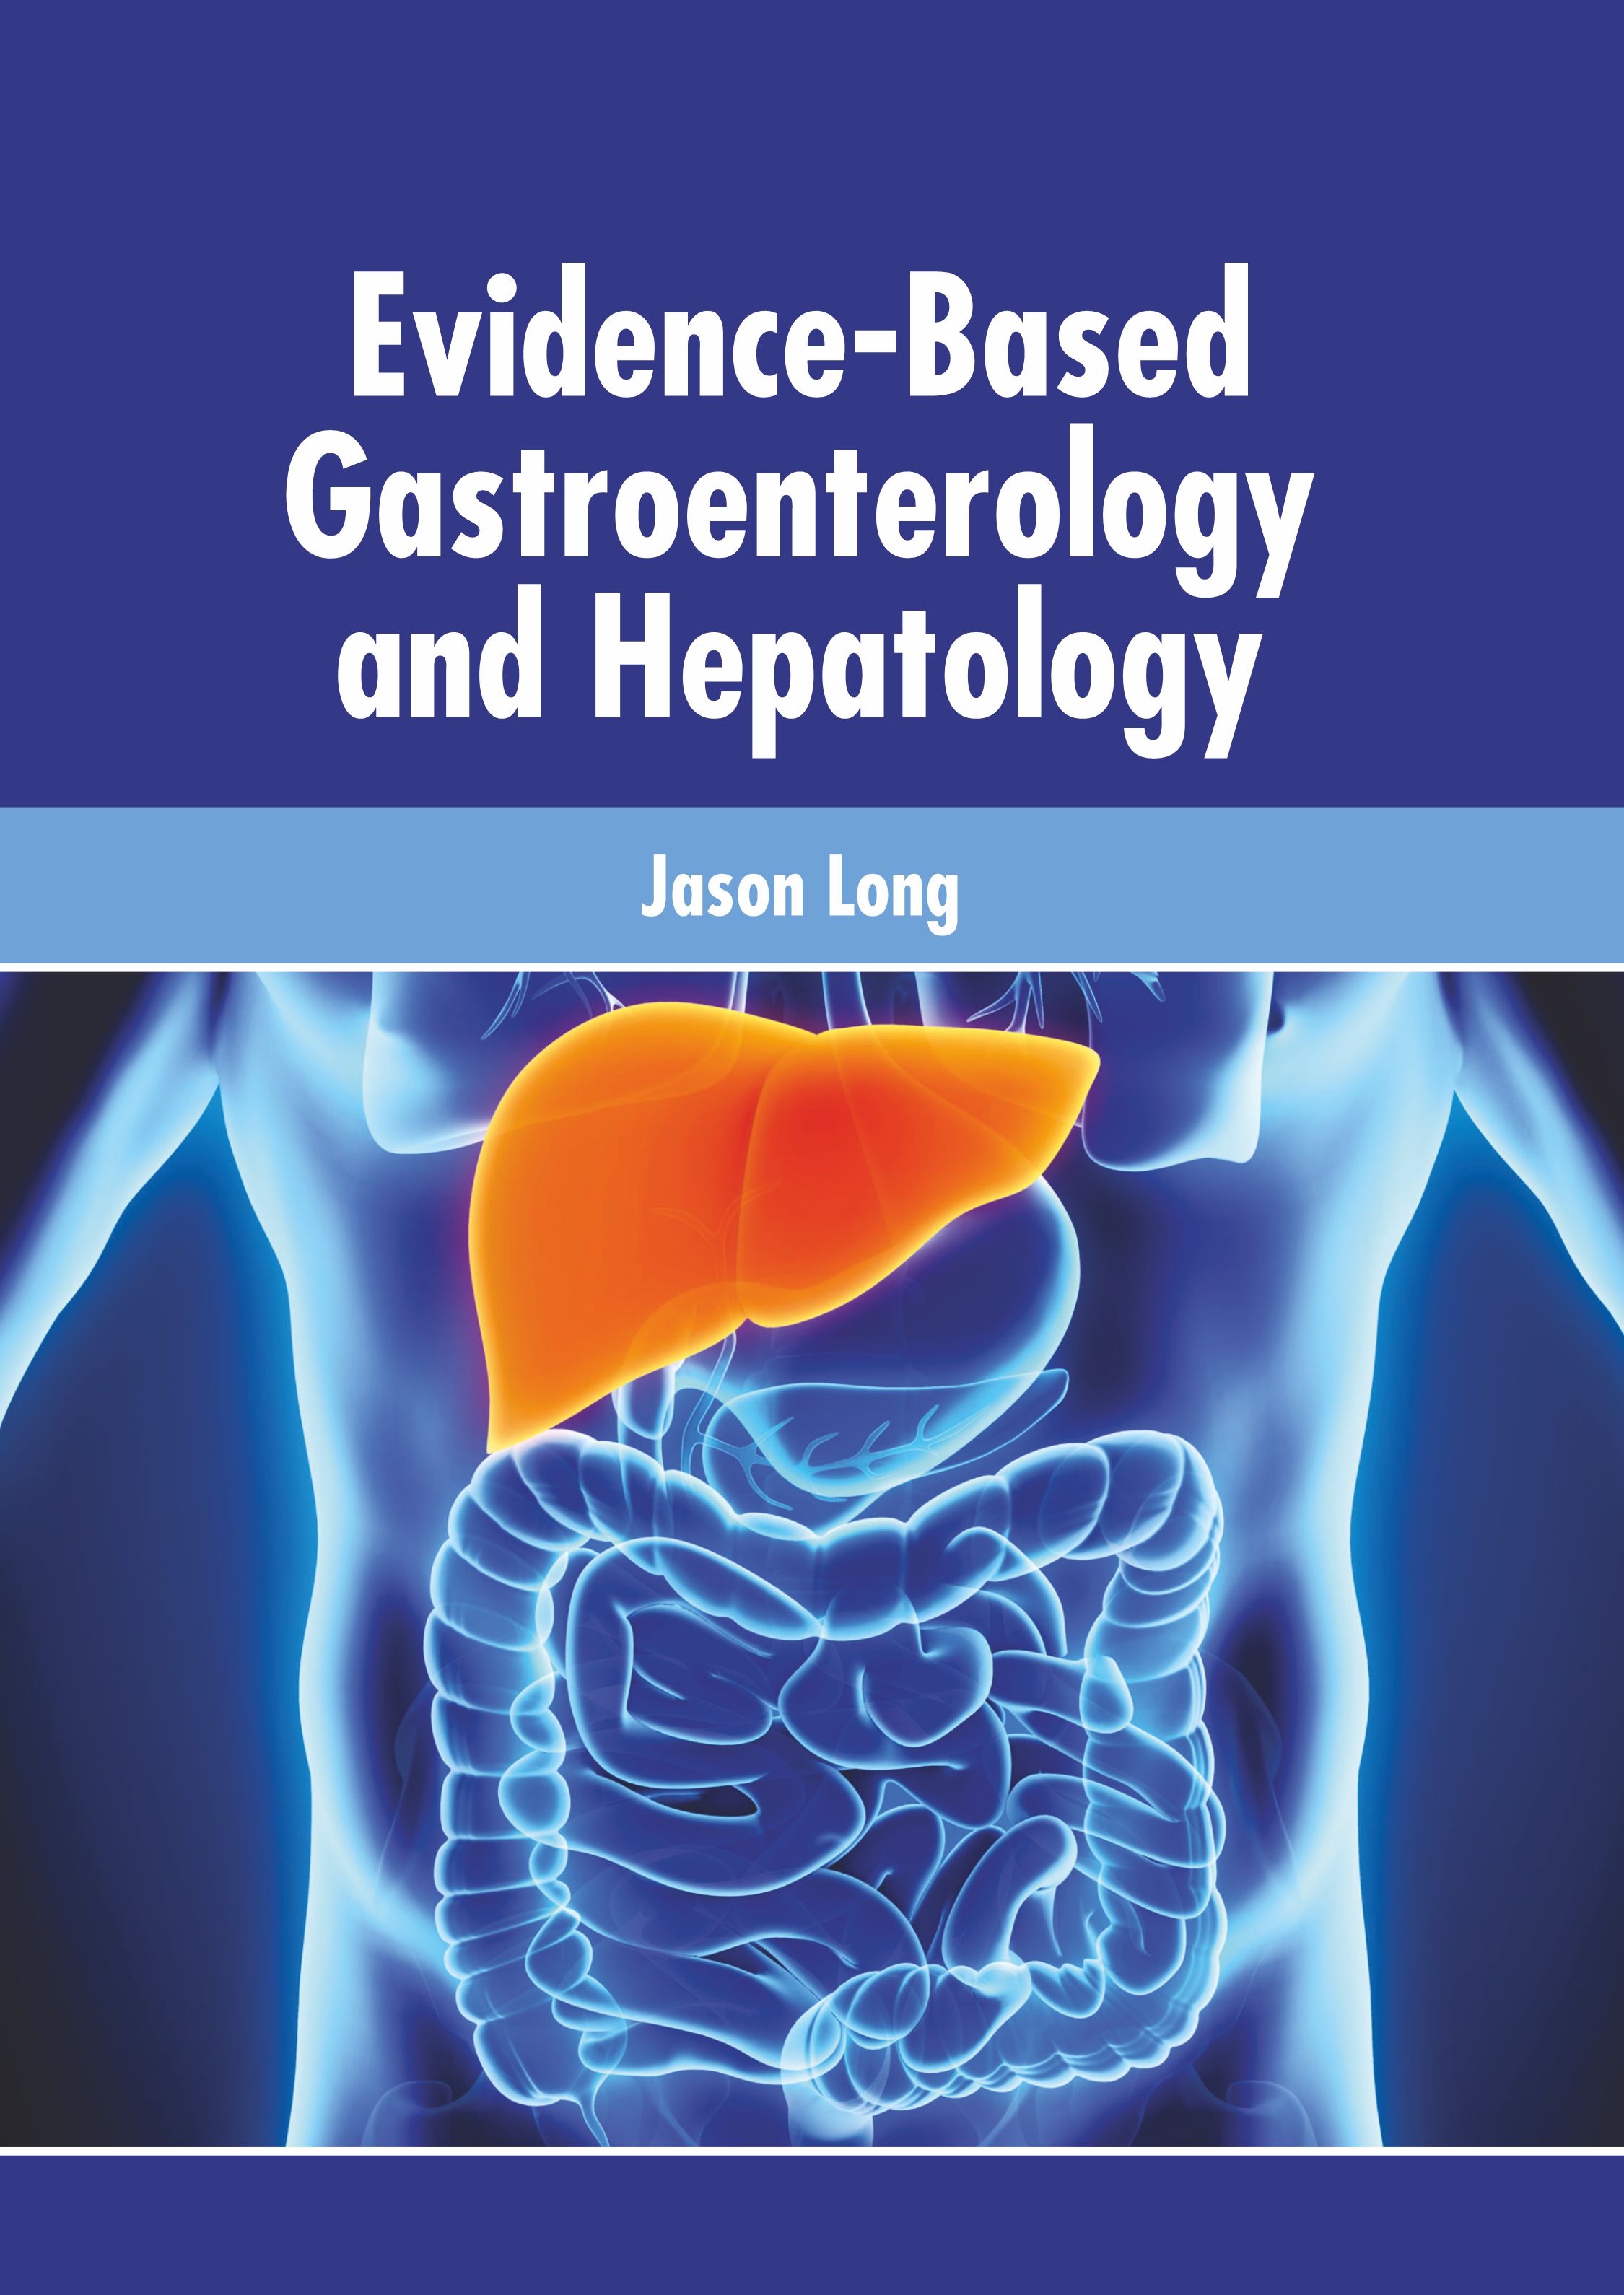 

medical-reference-books/gastroenterology/gastroenterology-an-evidence-based-approach-9781639271382